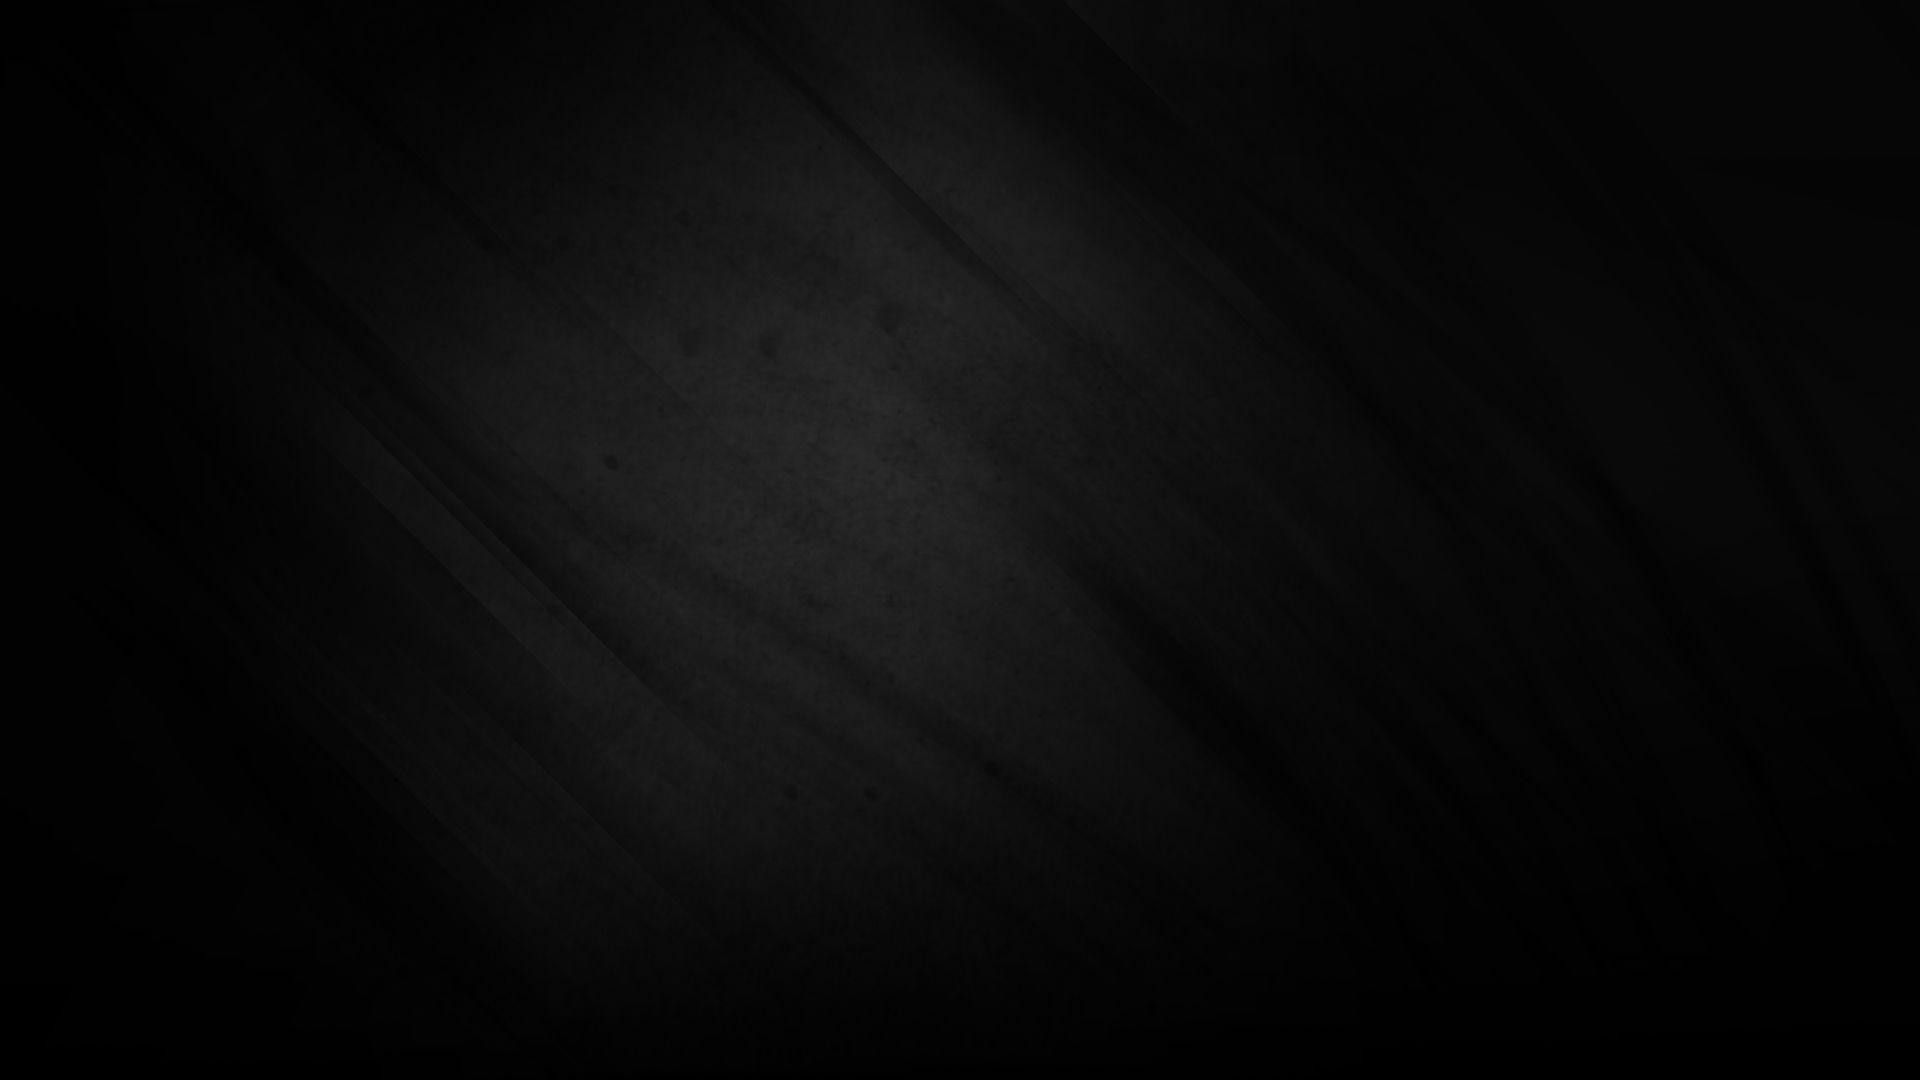 1080p HD 4k Black Amoled PC Wallpapers - Wallpaper Cave